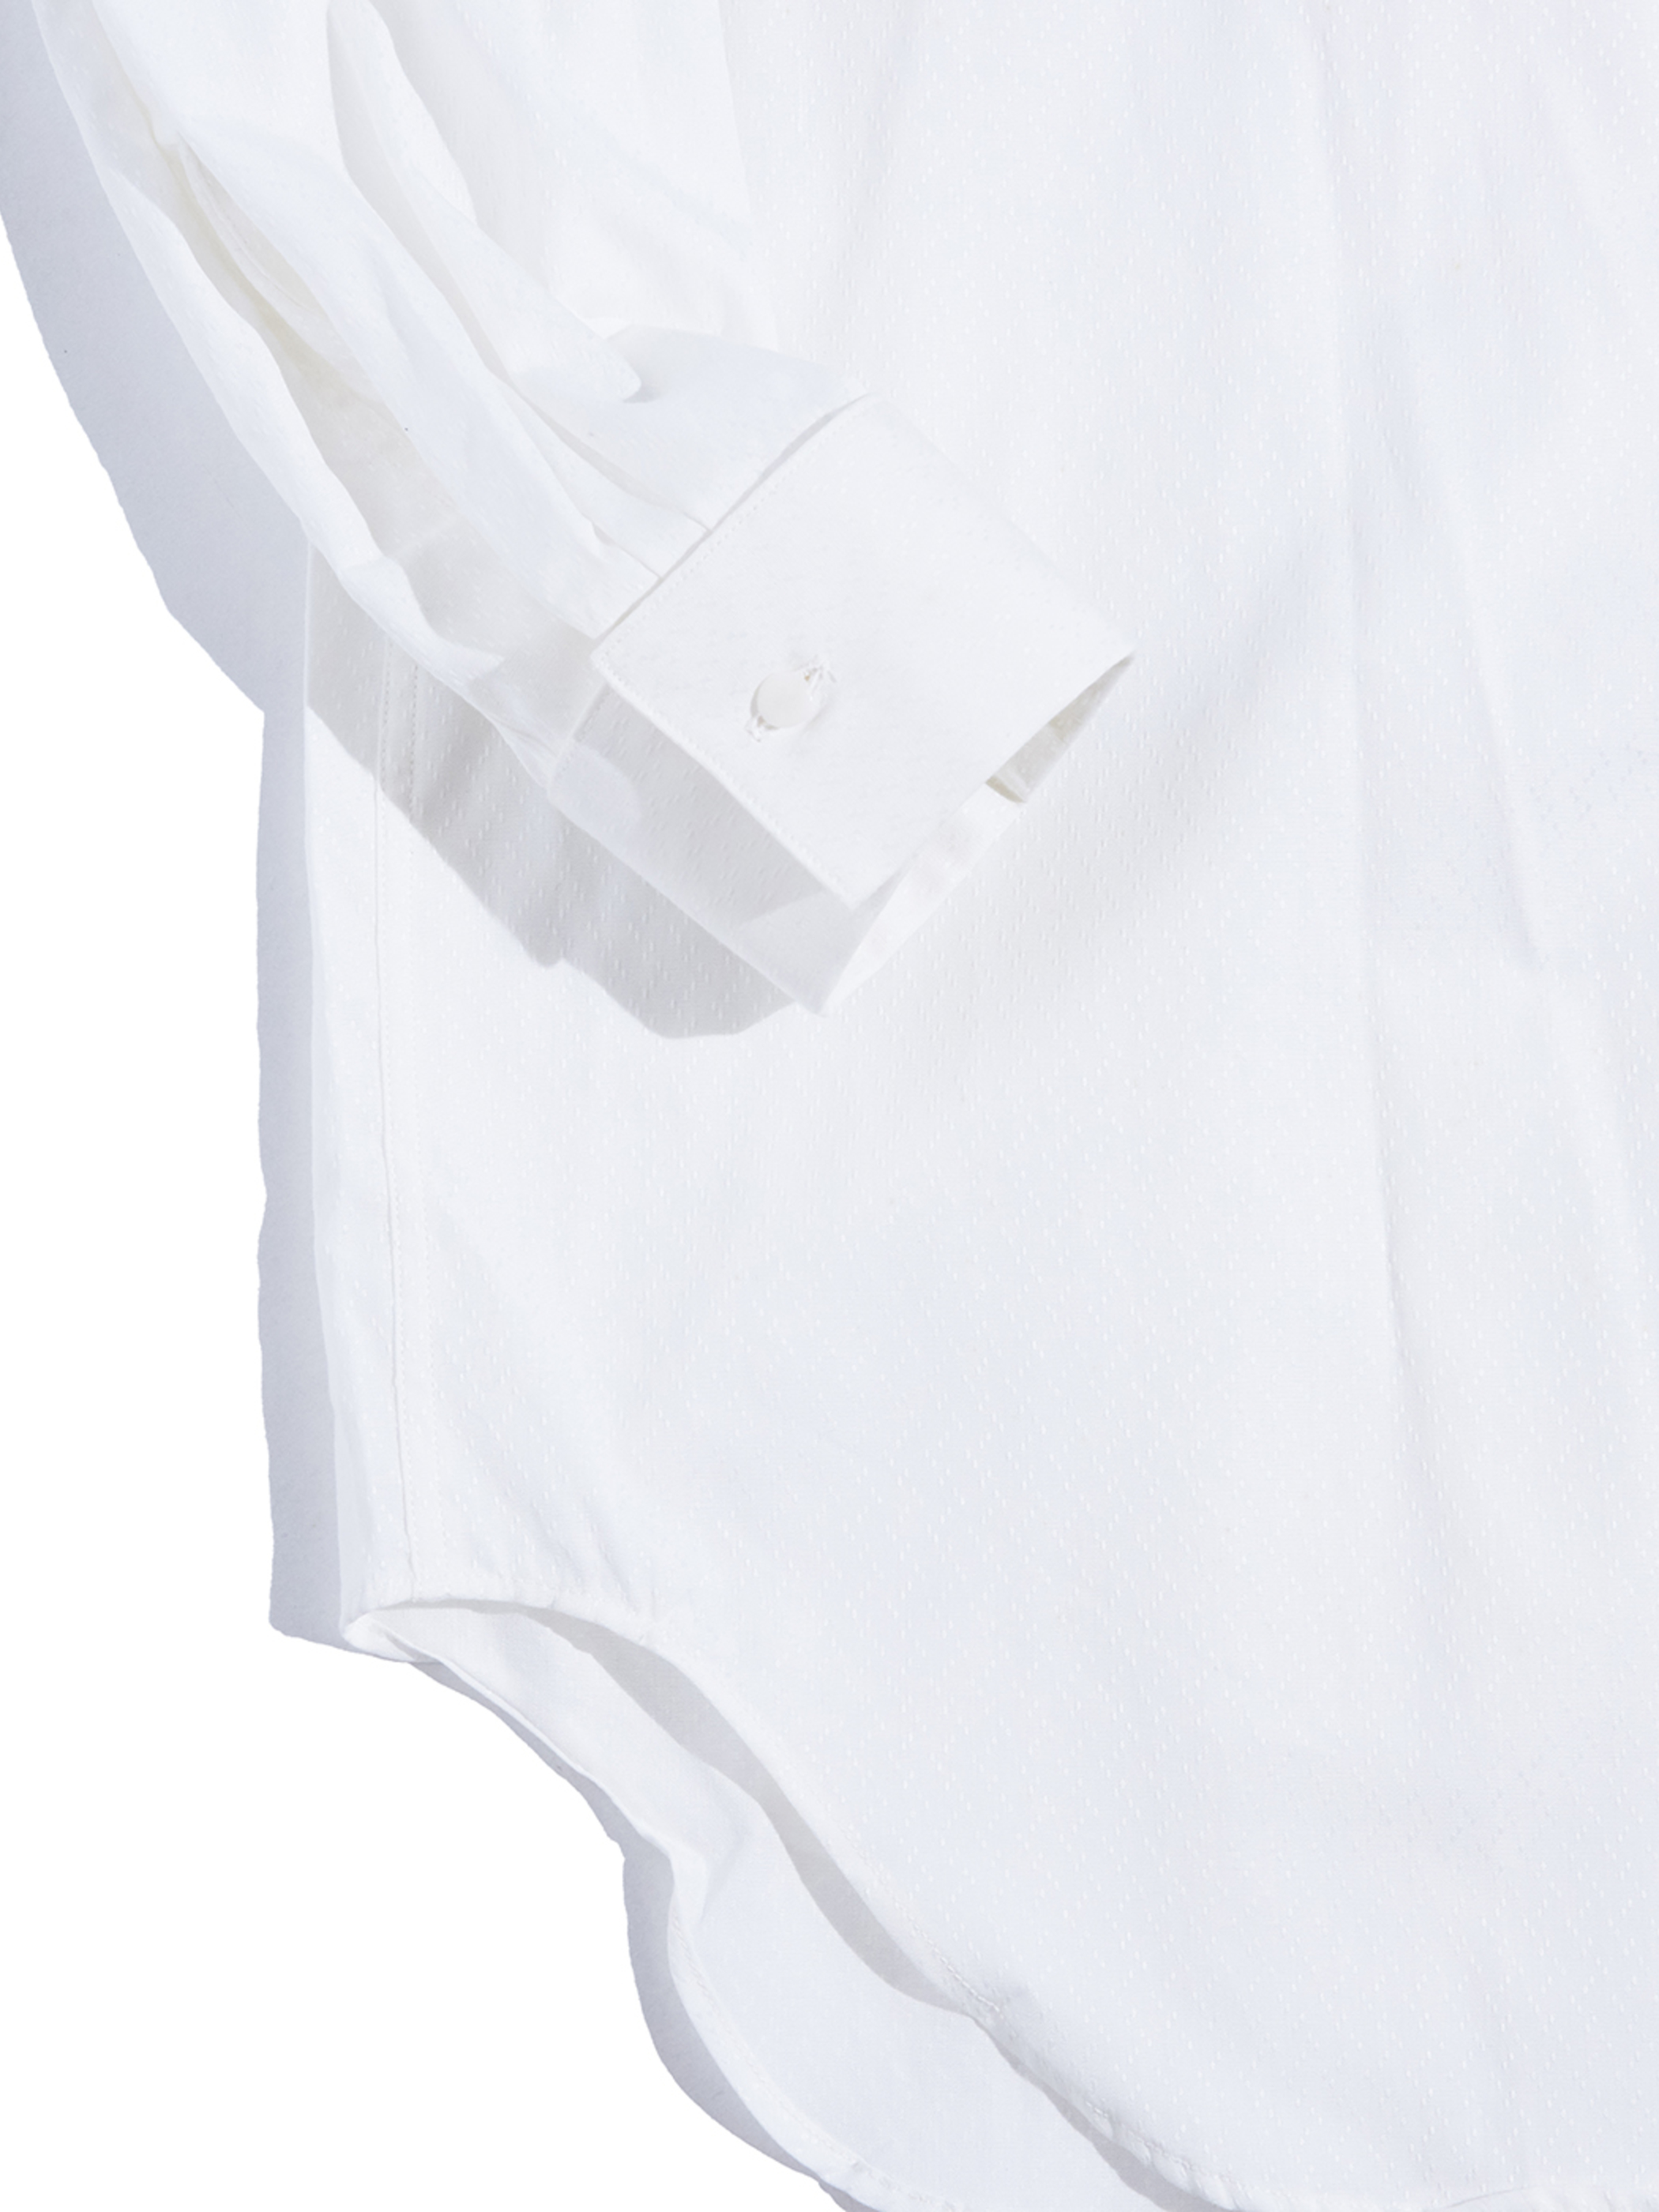 NOS 1950s "VEB TADELLOS" woven pattern dress shirt -WHITE-